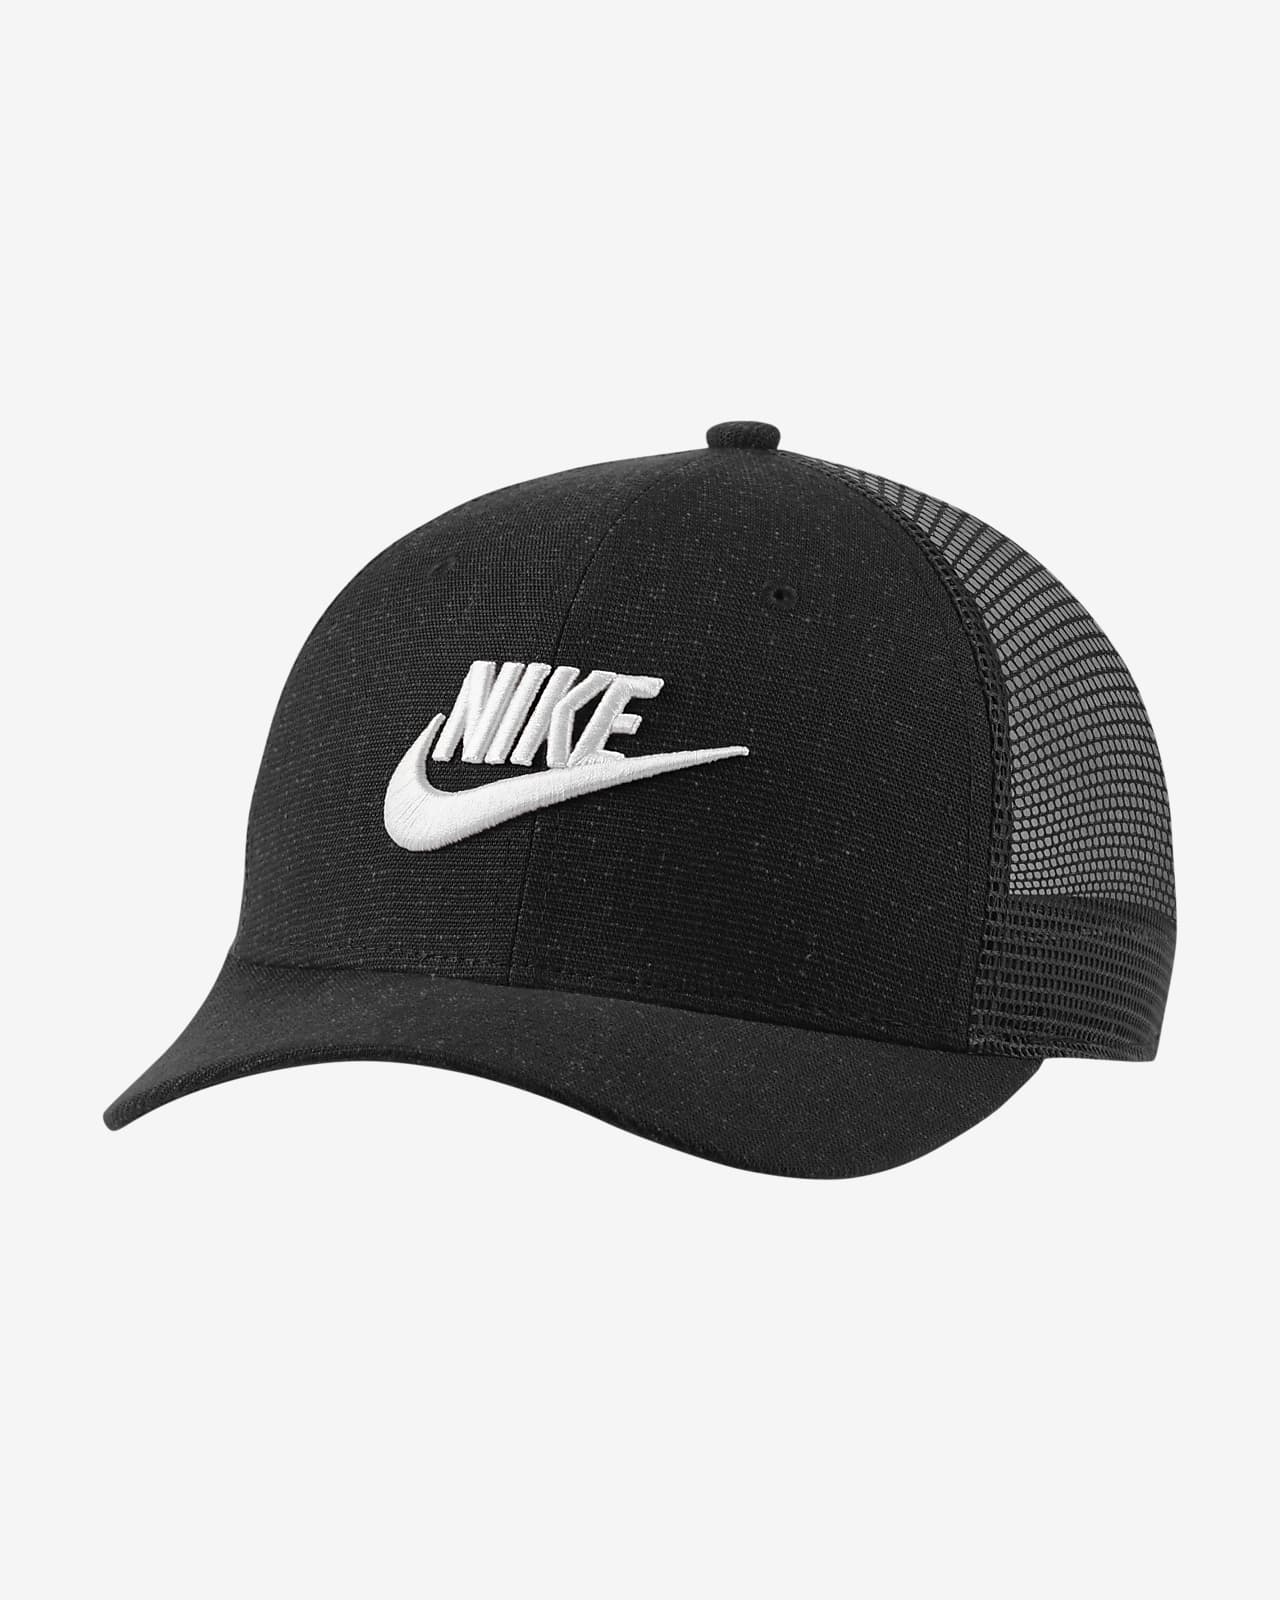 classic 99 nike hat